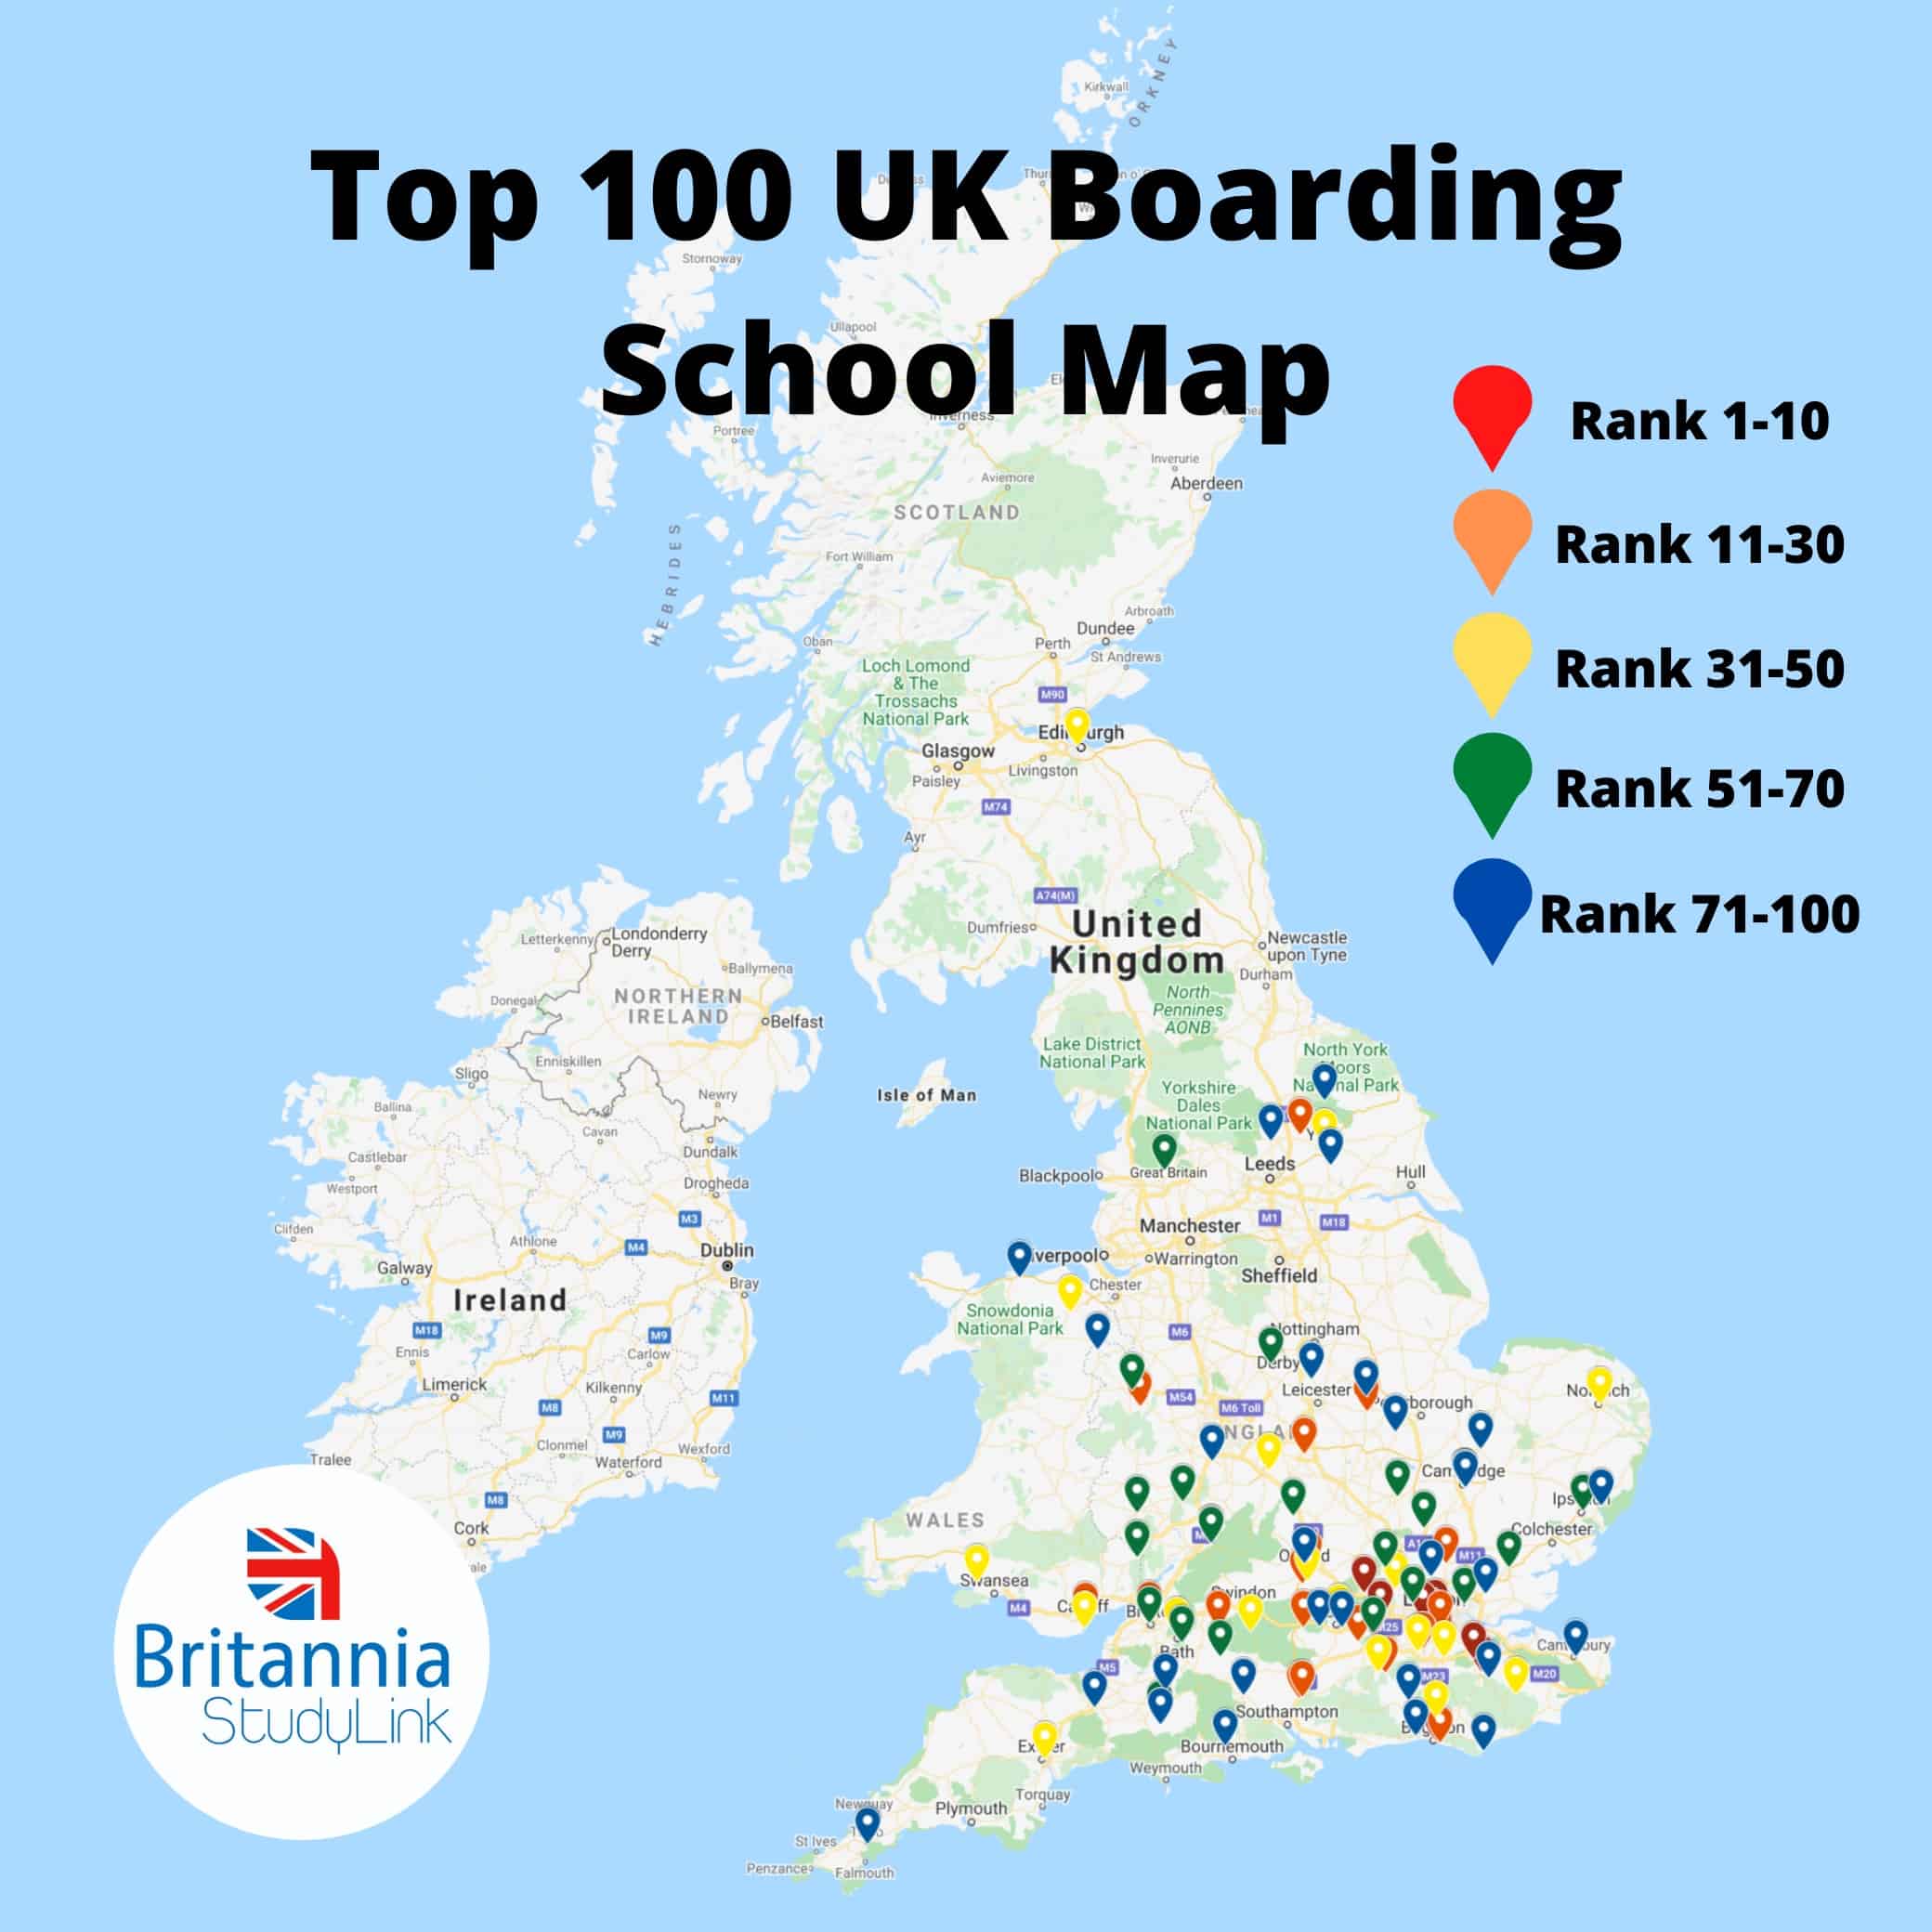 Top 100 UK Boarding School Map